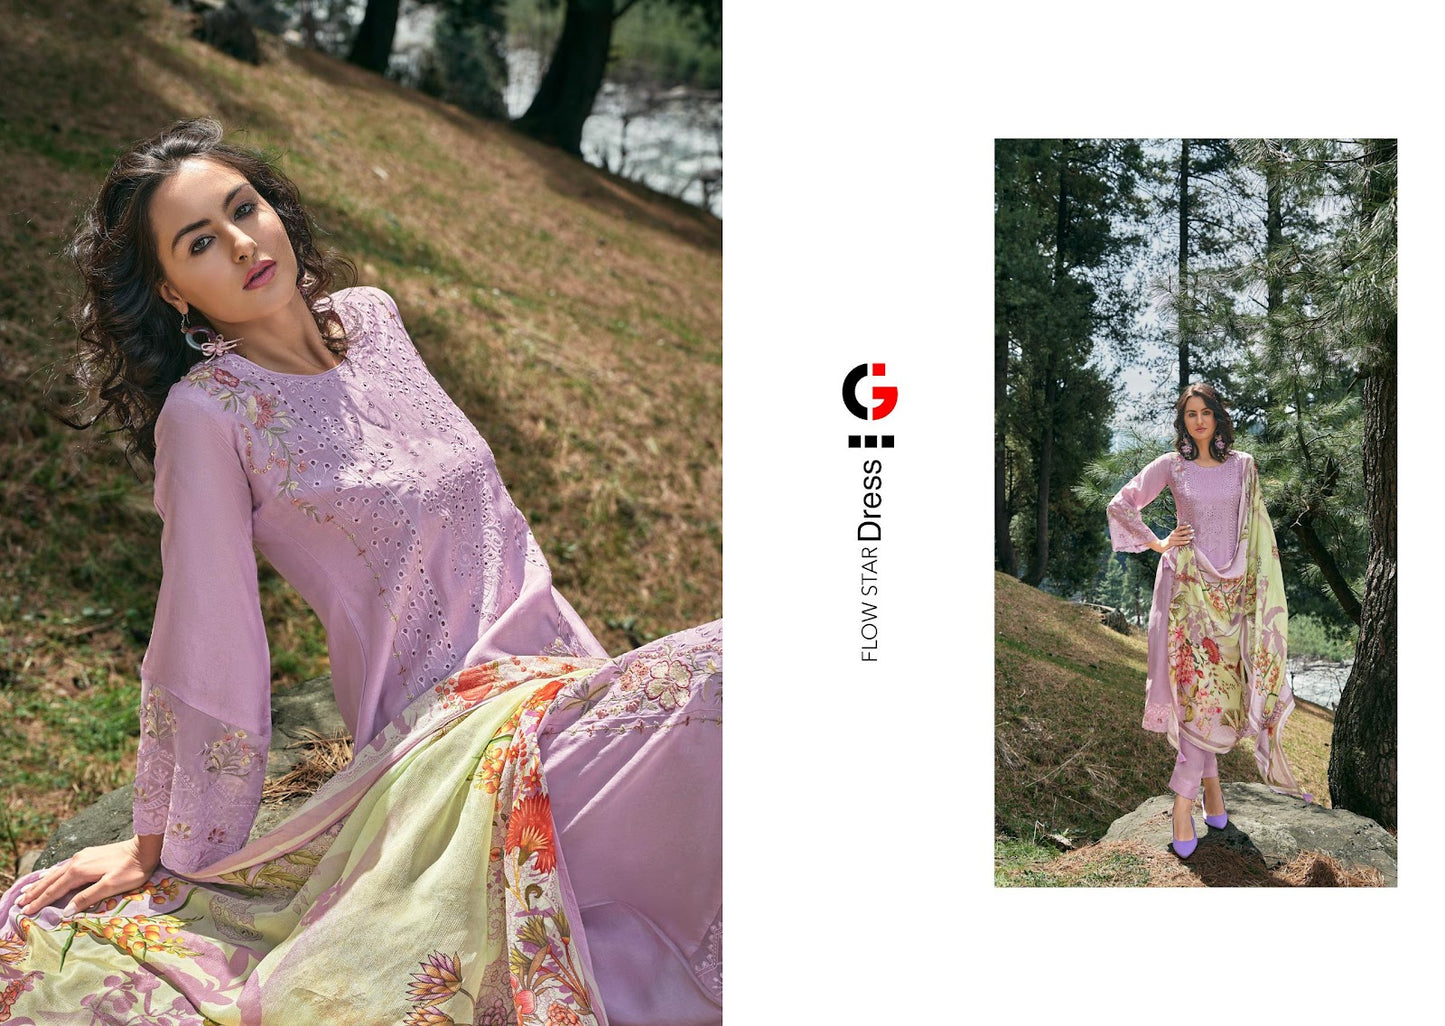 Tareef Gull Jee Russian Silk Pant Style Suits Wholesaler